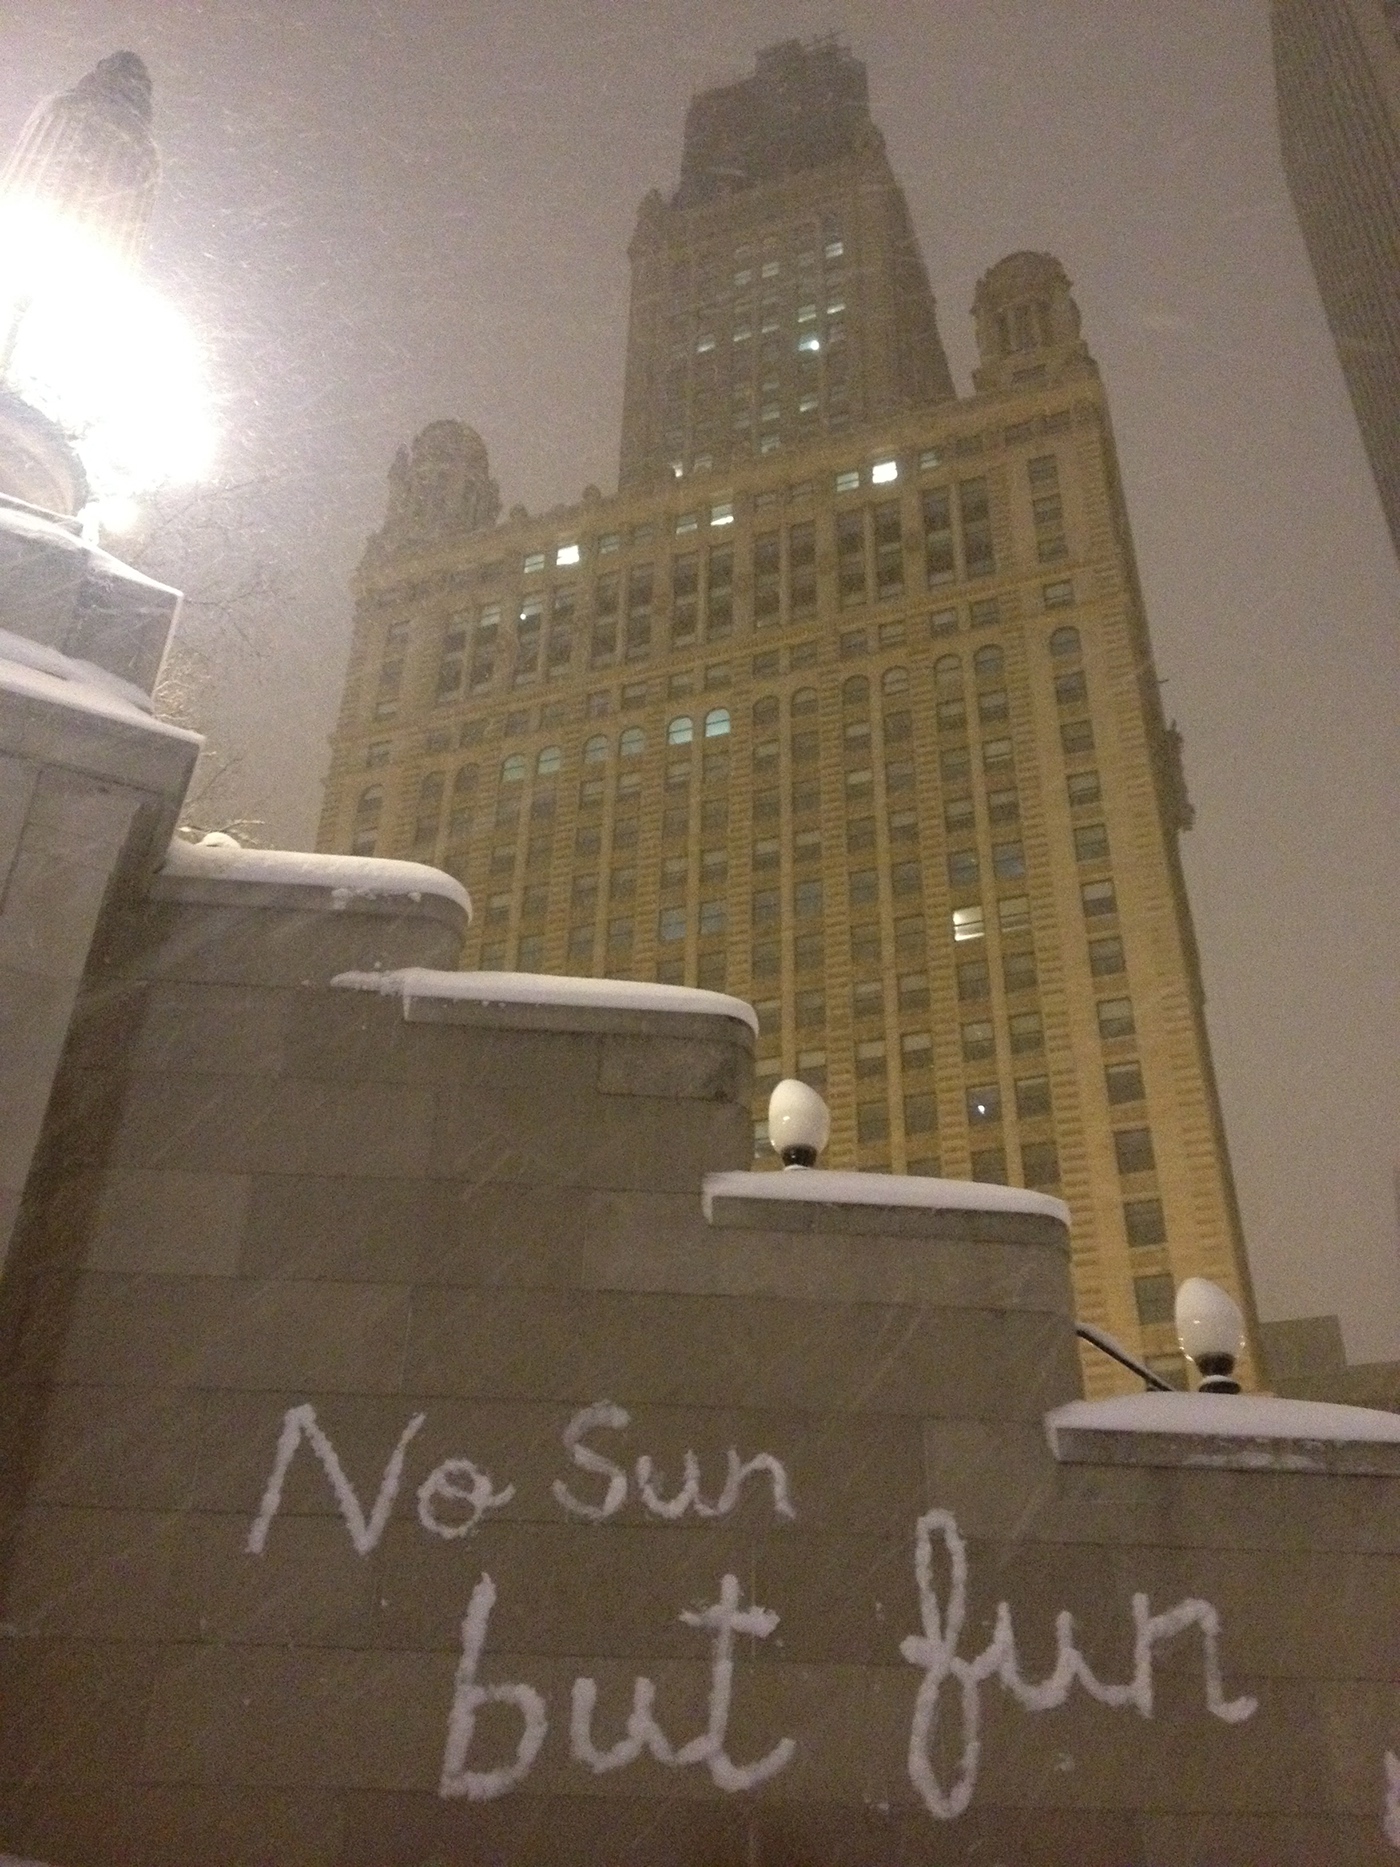 nose noselanariz chicago snow graffiti post graffiti streetart New Year´s New Year´sresolutions resolutions urban art snow snowgraffiti Blizzard